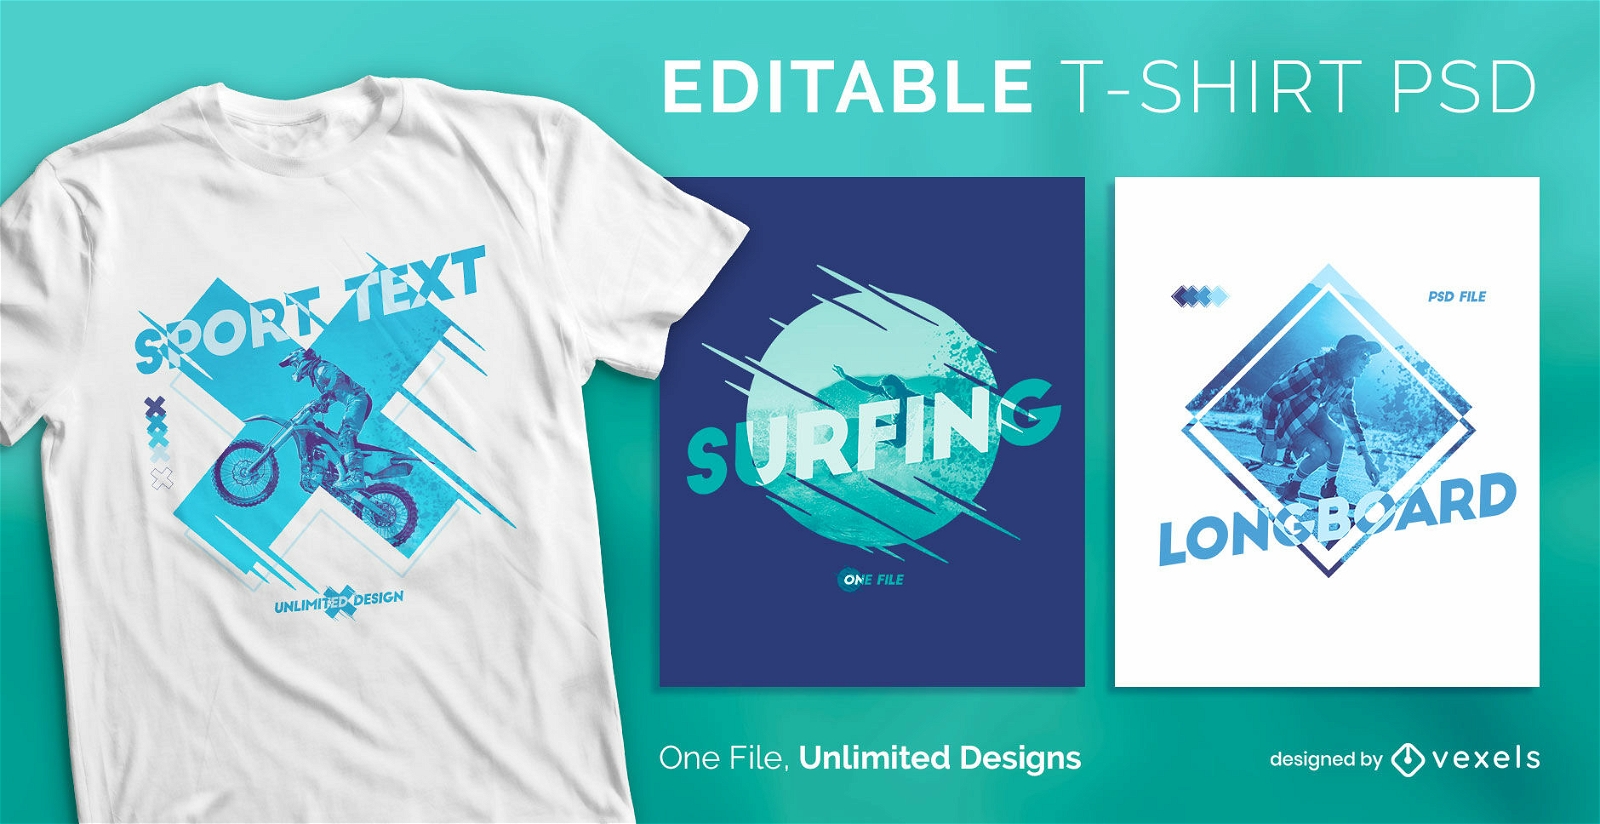 Sport & Athletic T-Shirt Design Template Ideas